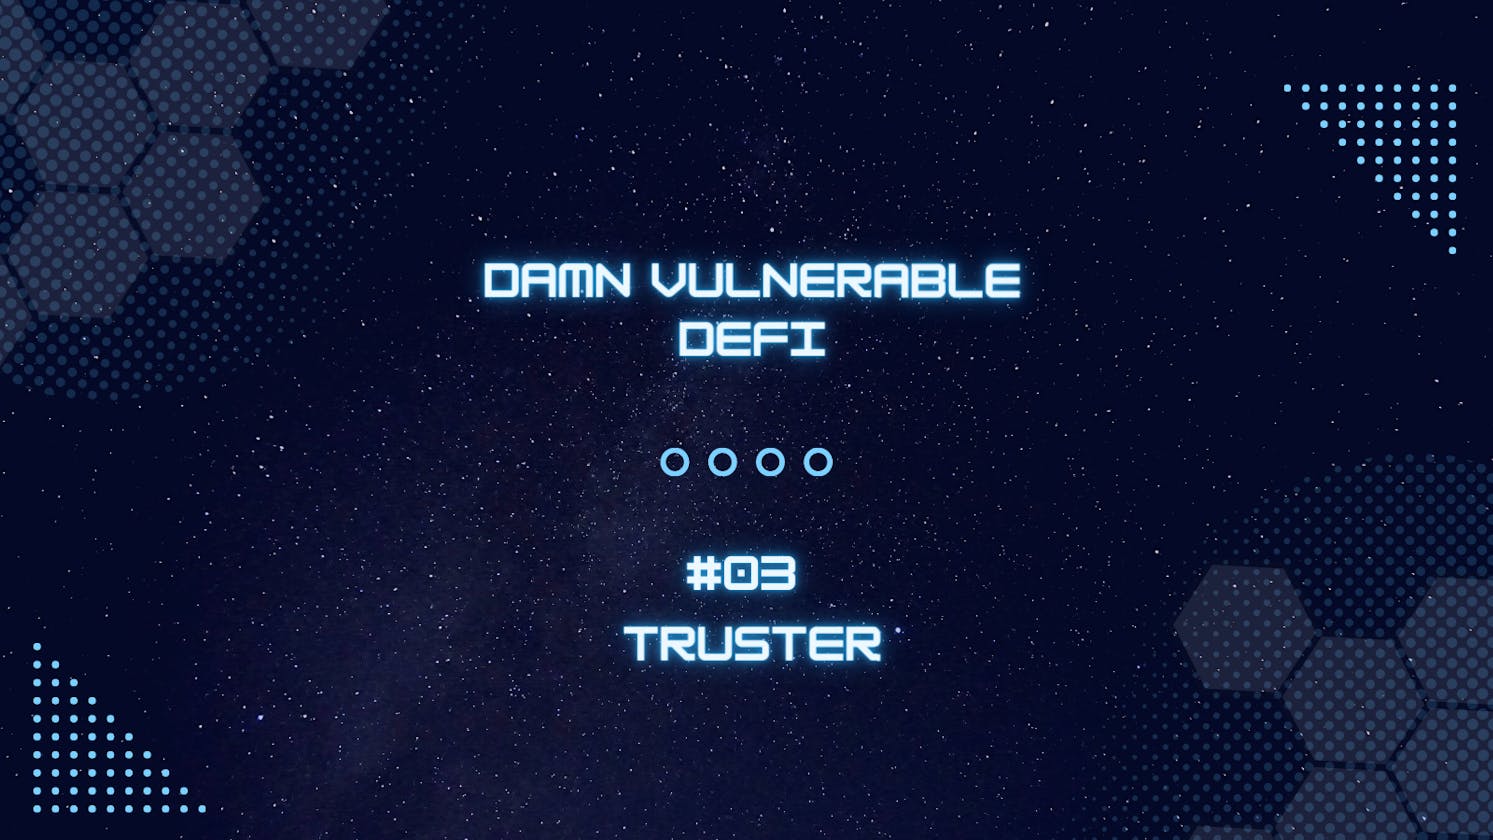 Truster - Damn Vulnerable DeFi #03